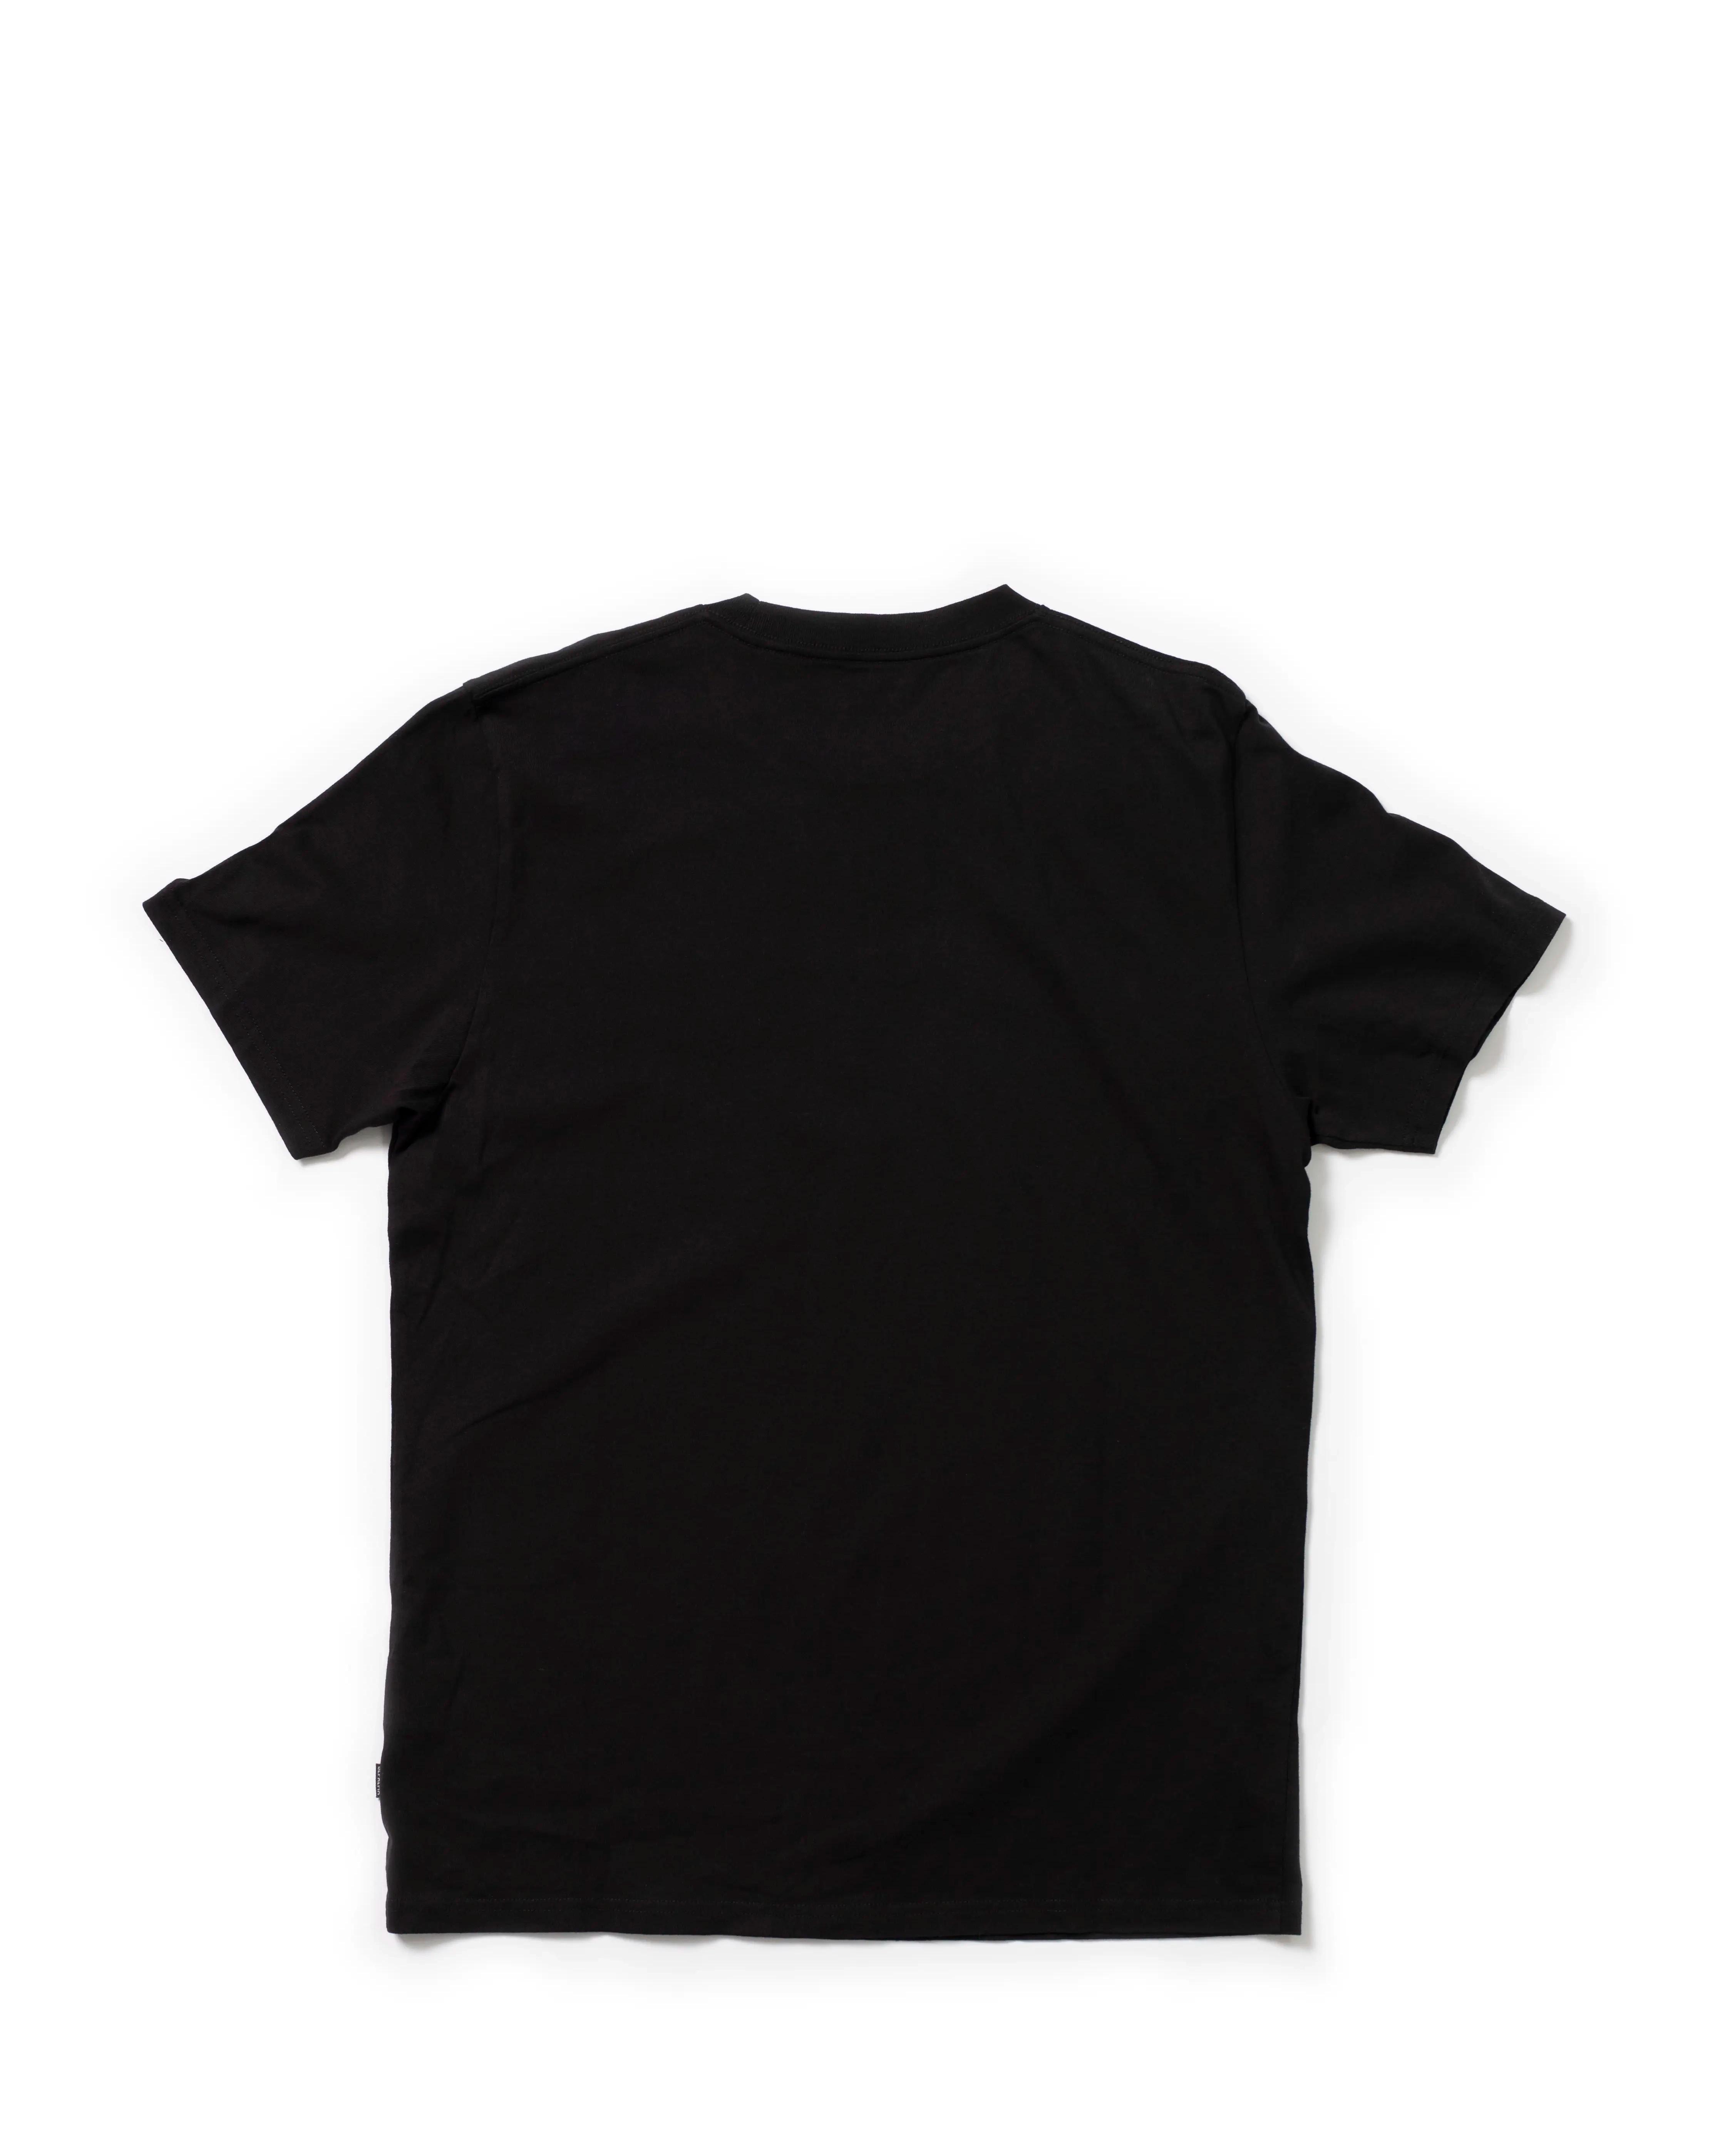 Photo of Twenty Four Seven S/S T-shirt, Black